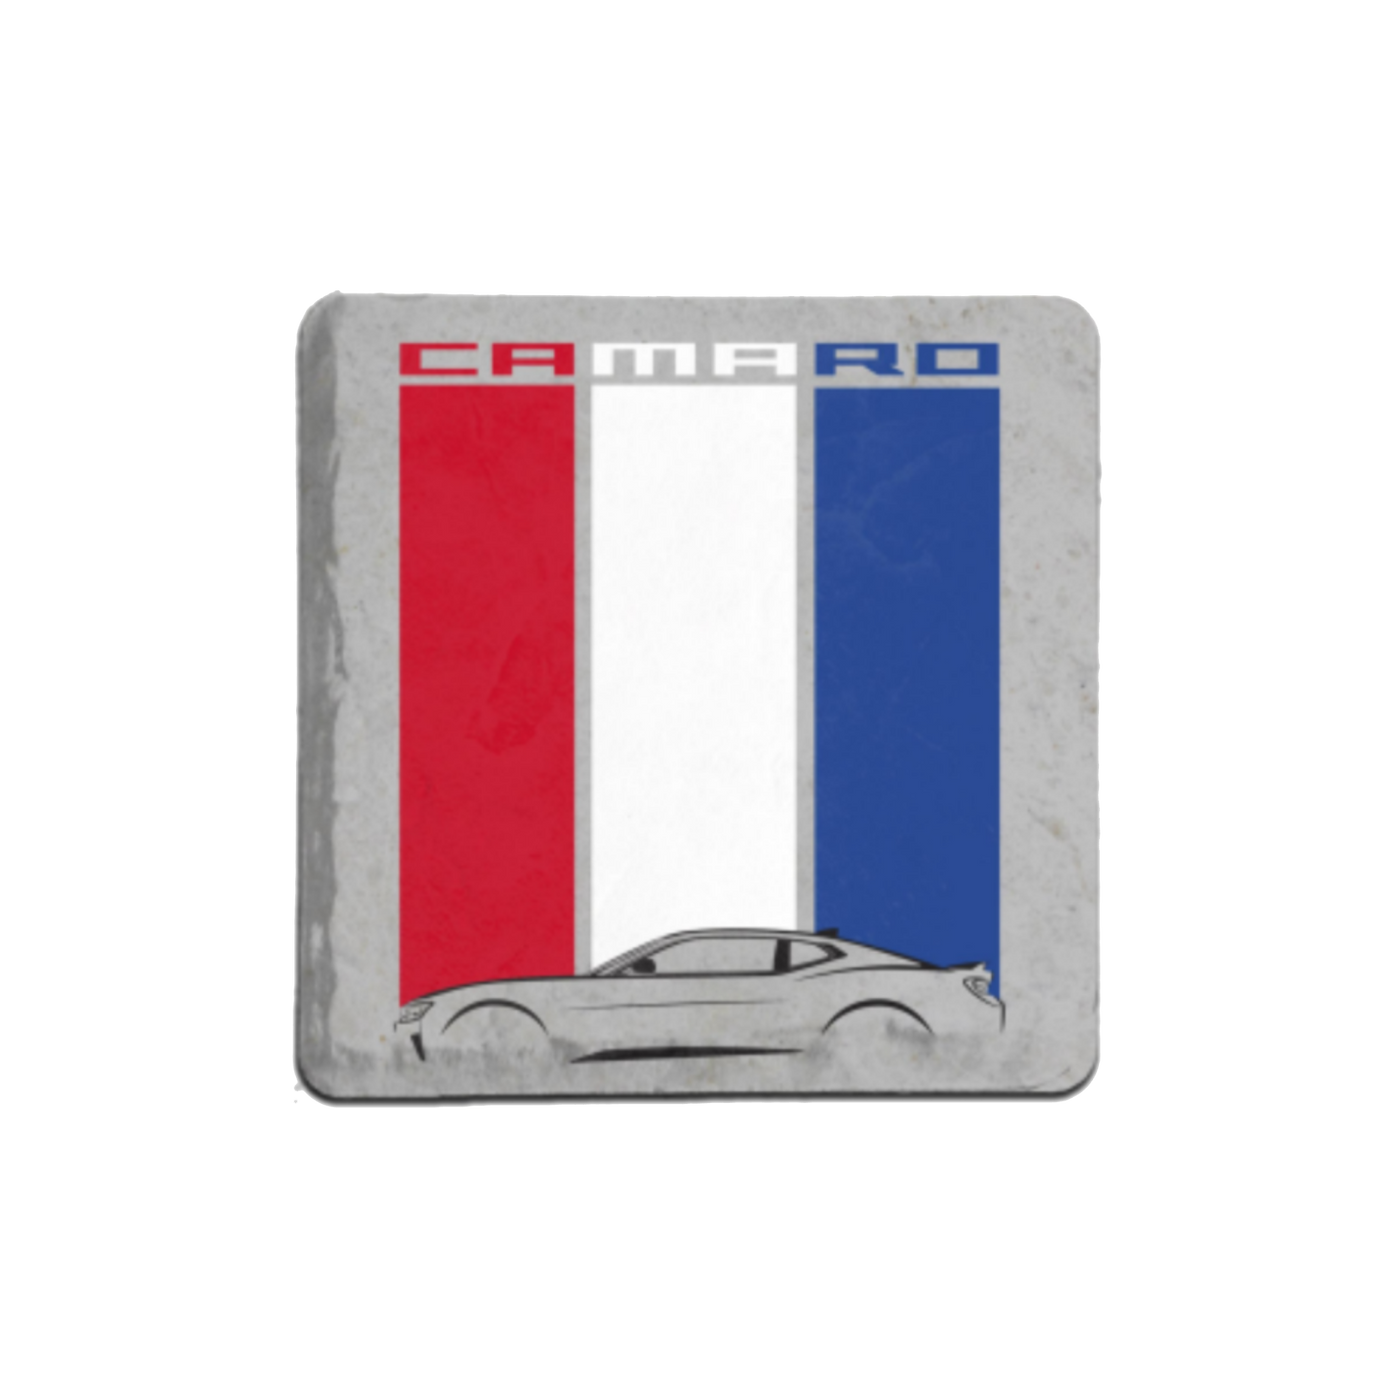 Camaro 6th Generation Badge Gesture Stone Coaster